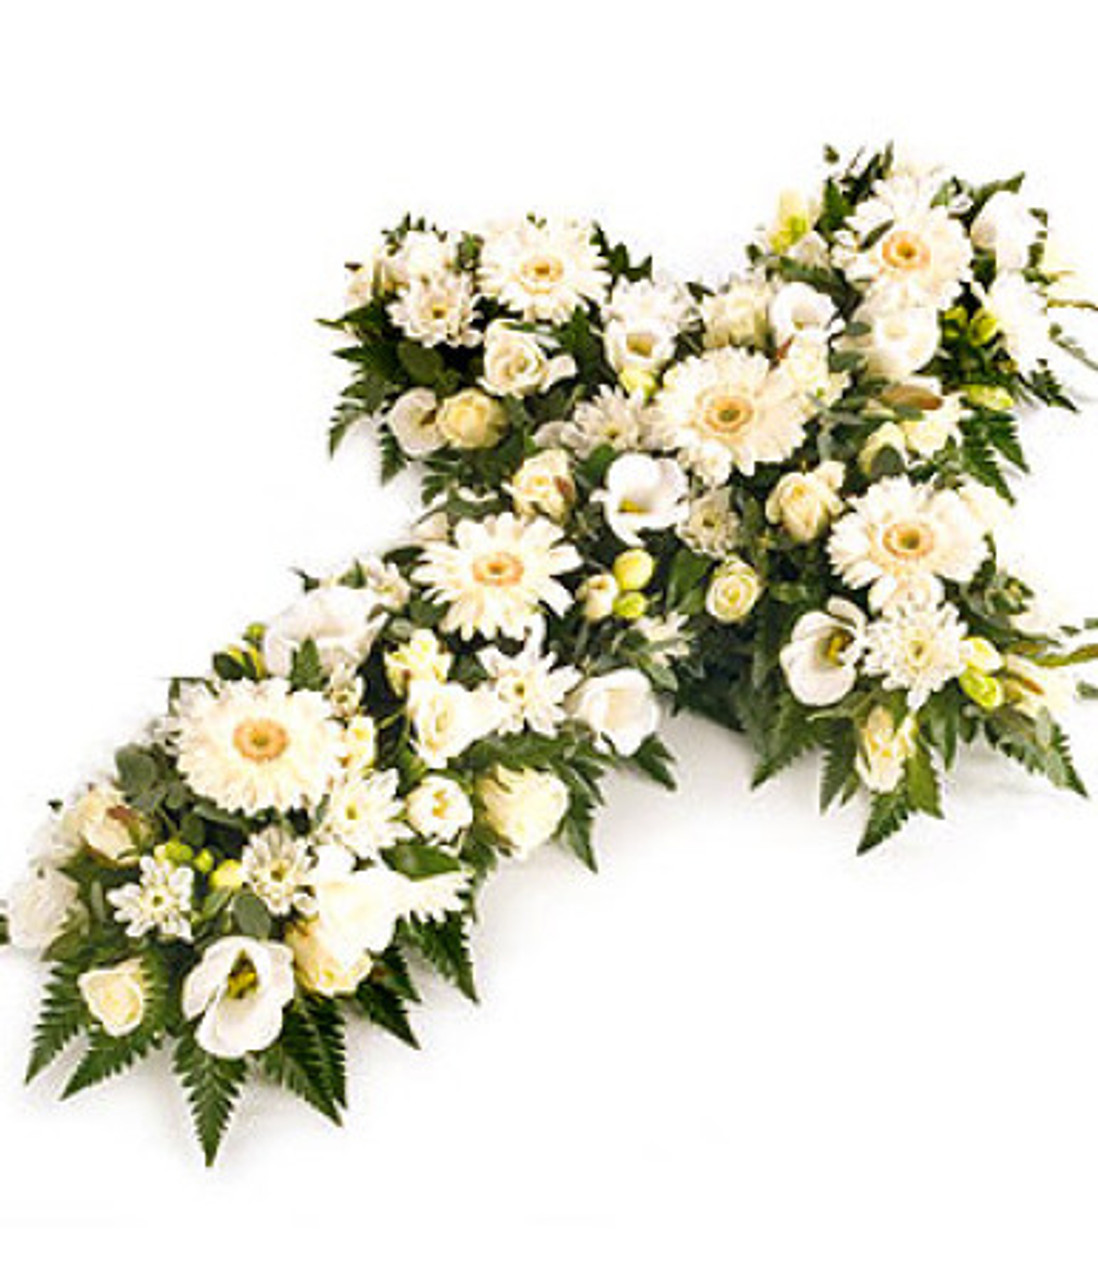 Sympathy Funeral Coffin Top Cross